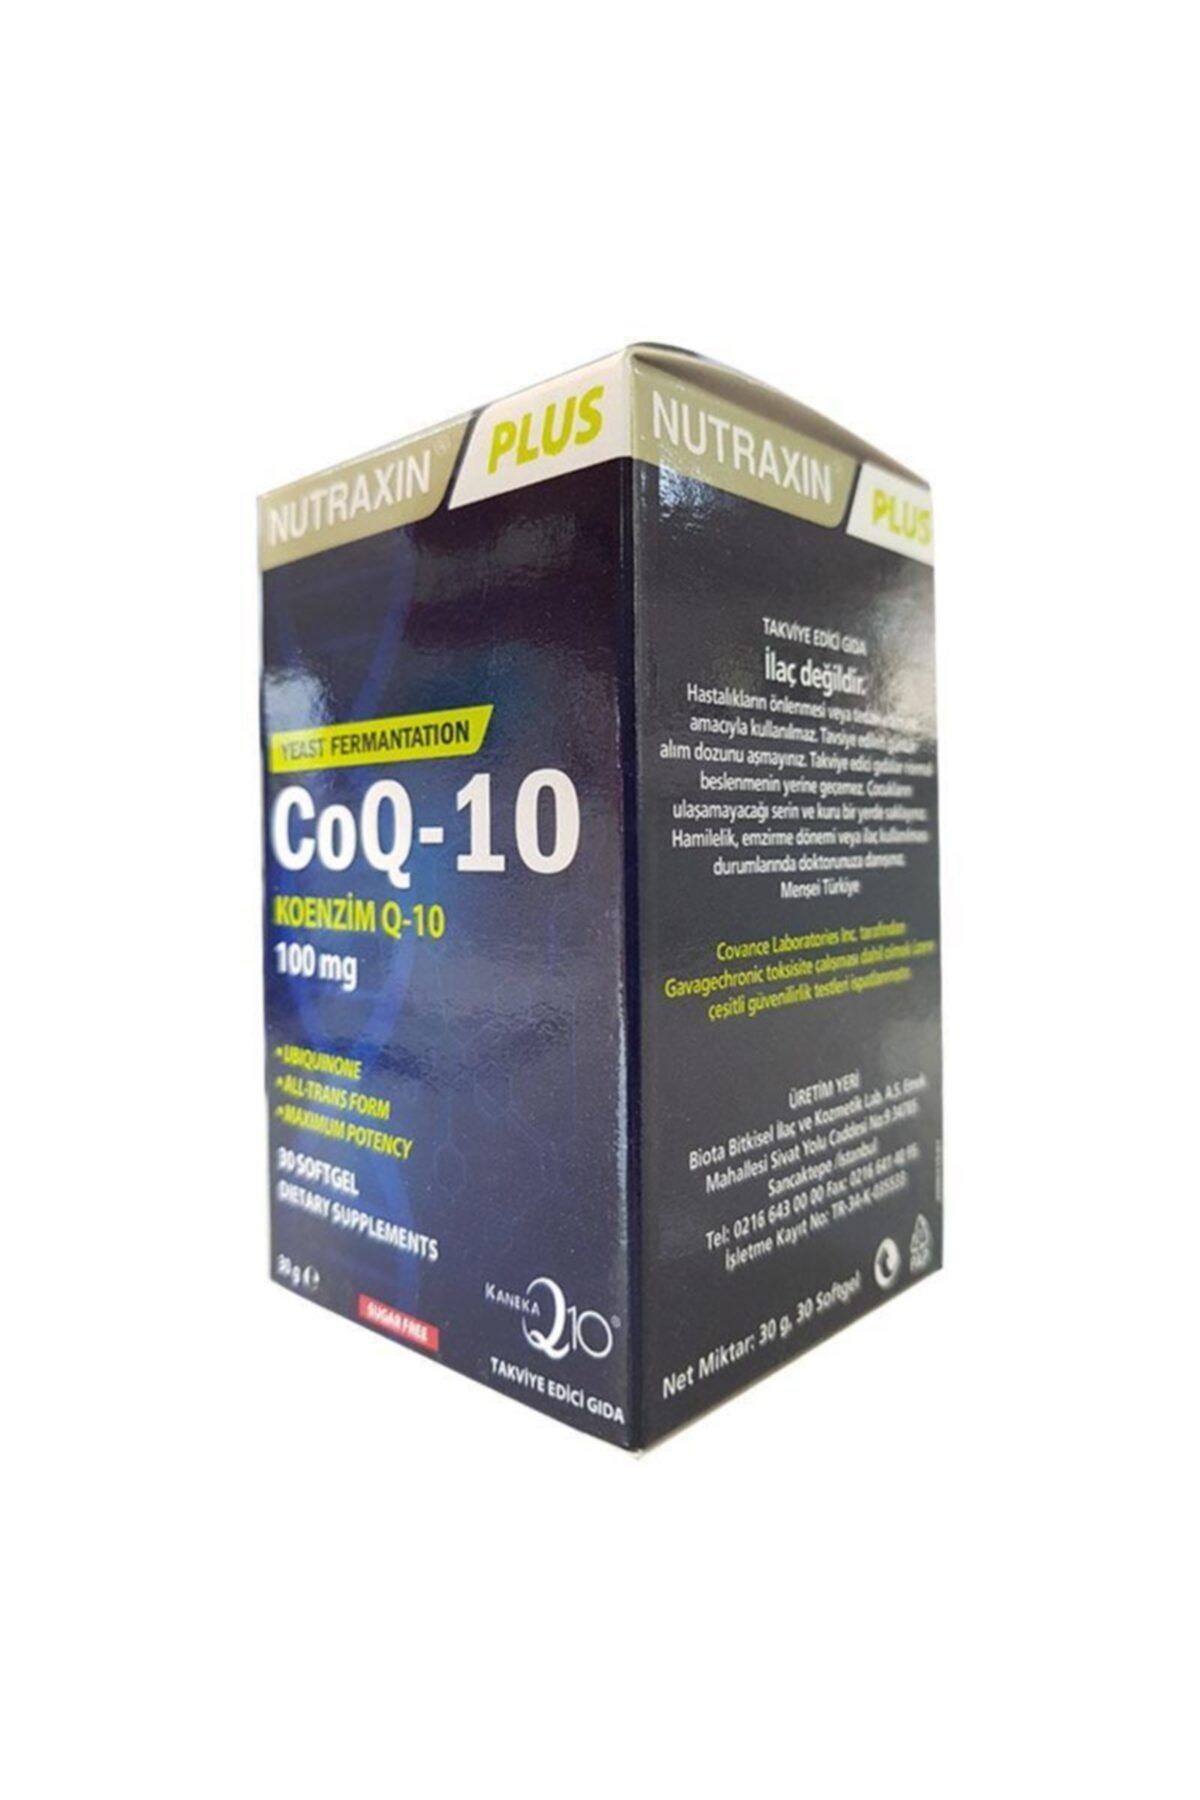 Nutraxin Coq-10 30 Softgel